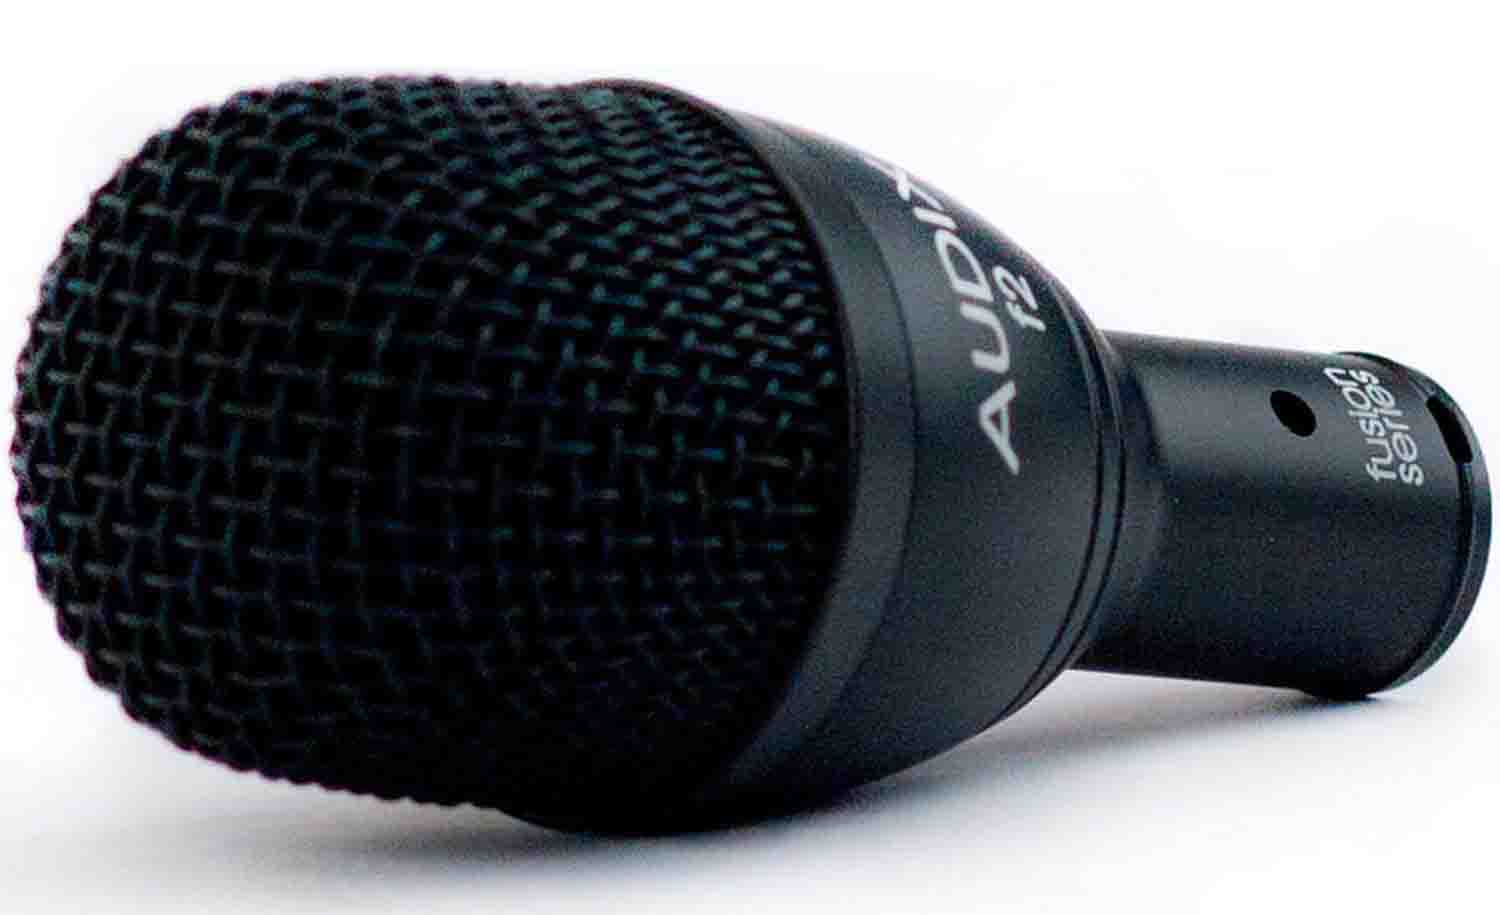 Audix F2 Hypercardioid Dynamic Instrument Microphone - Hollywood DJ